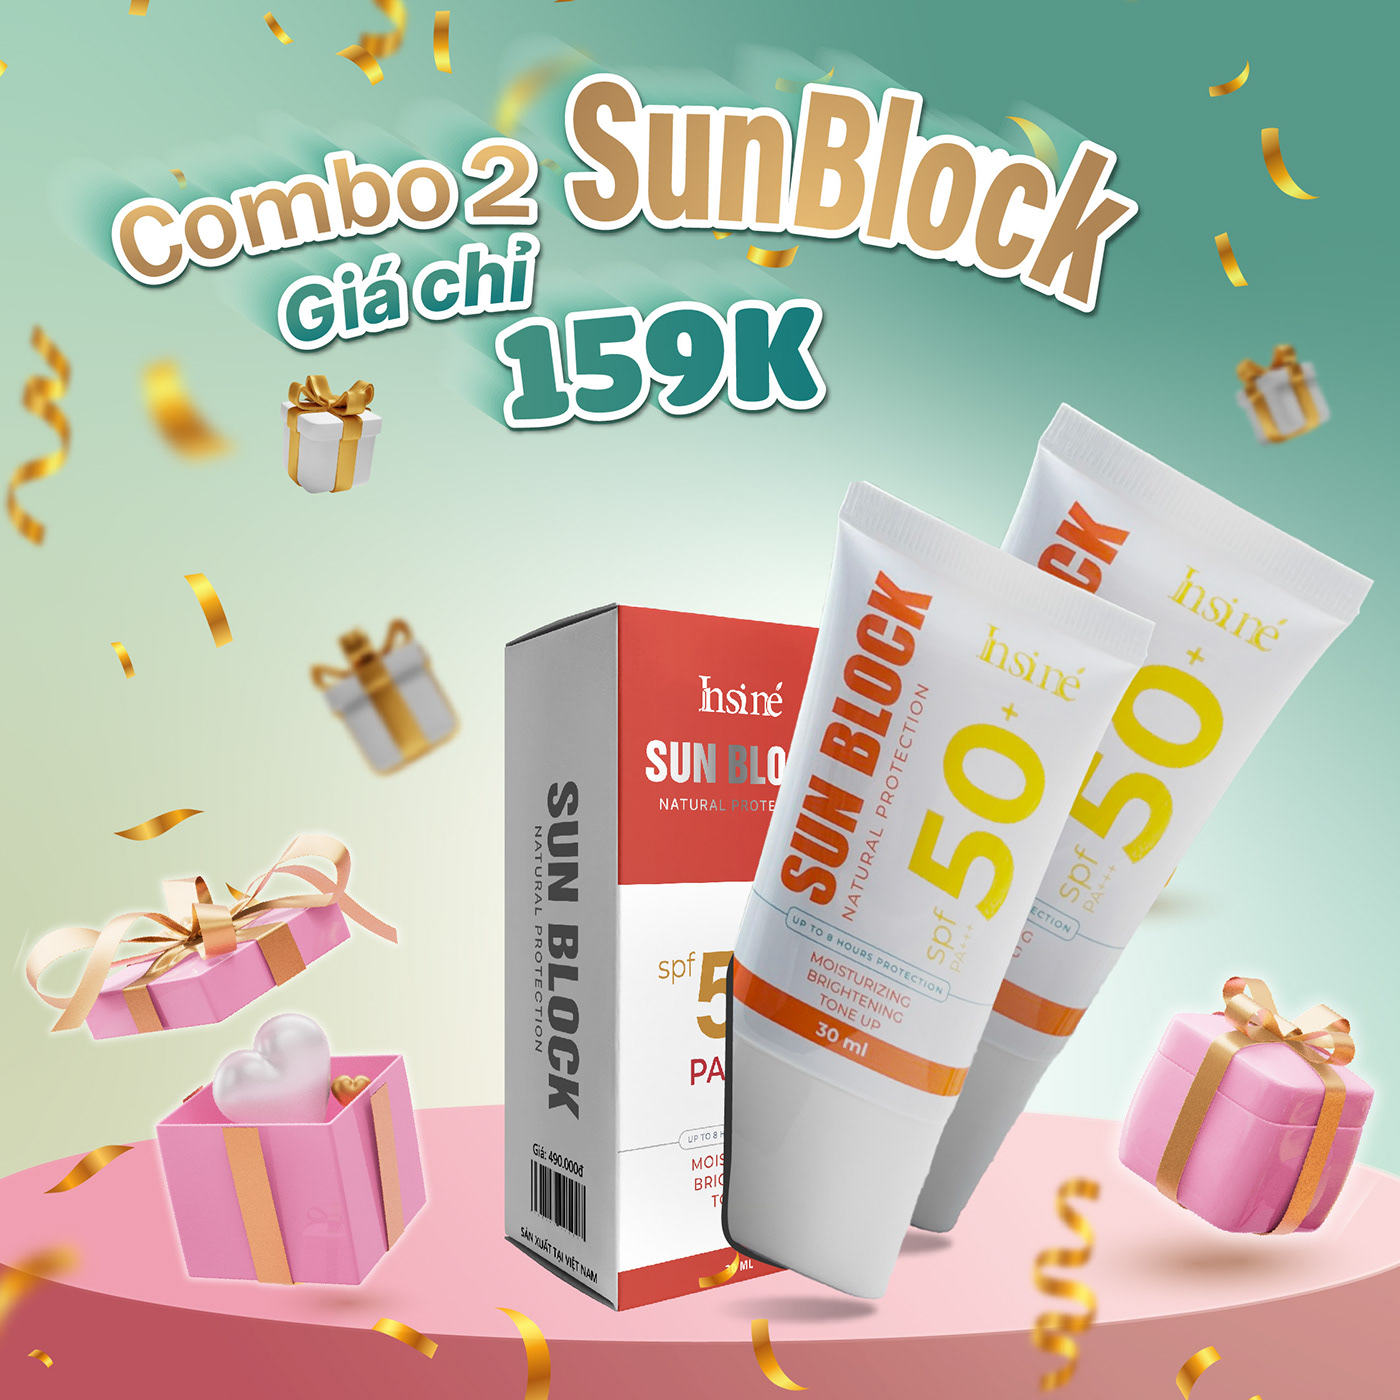 design sunset Suncreen banner campaign ads